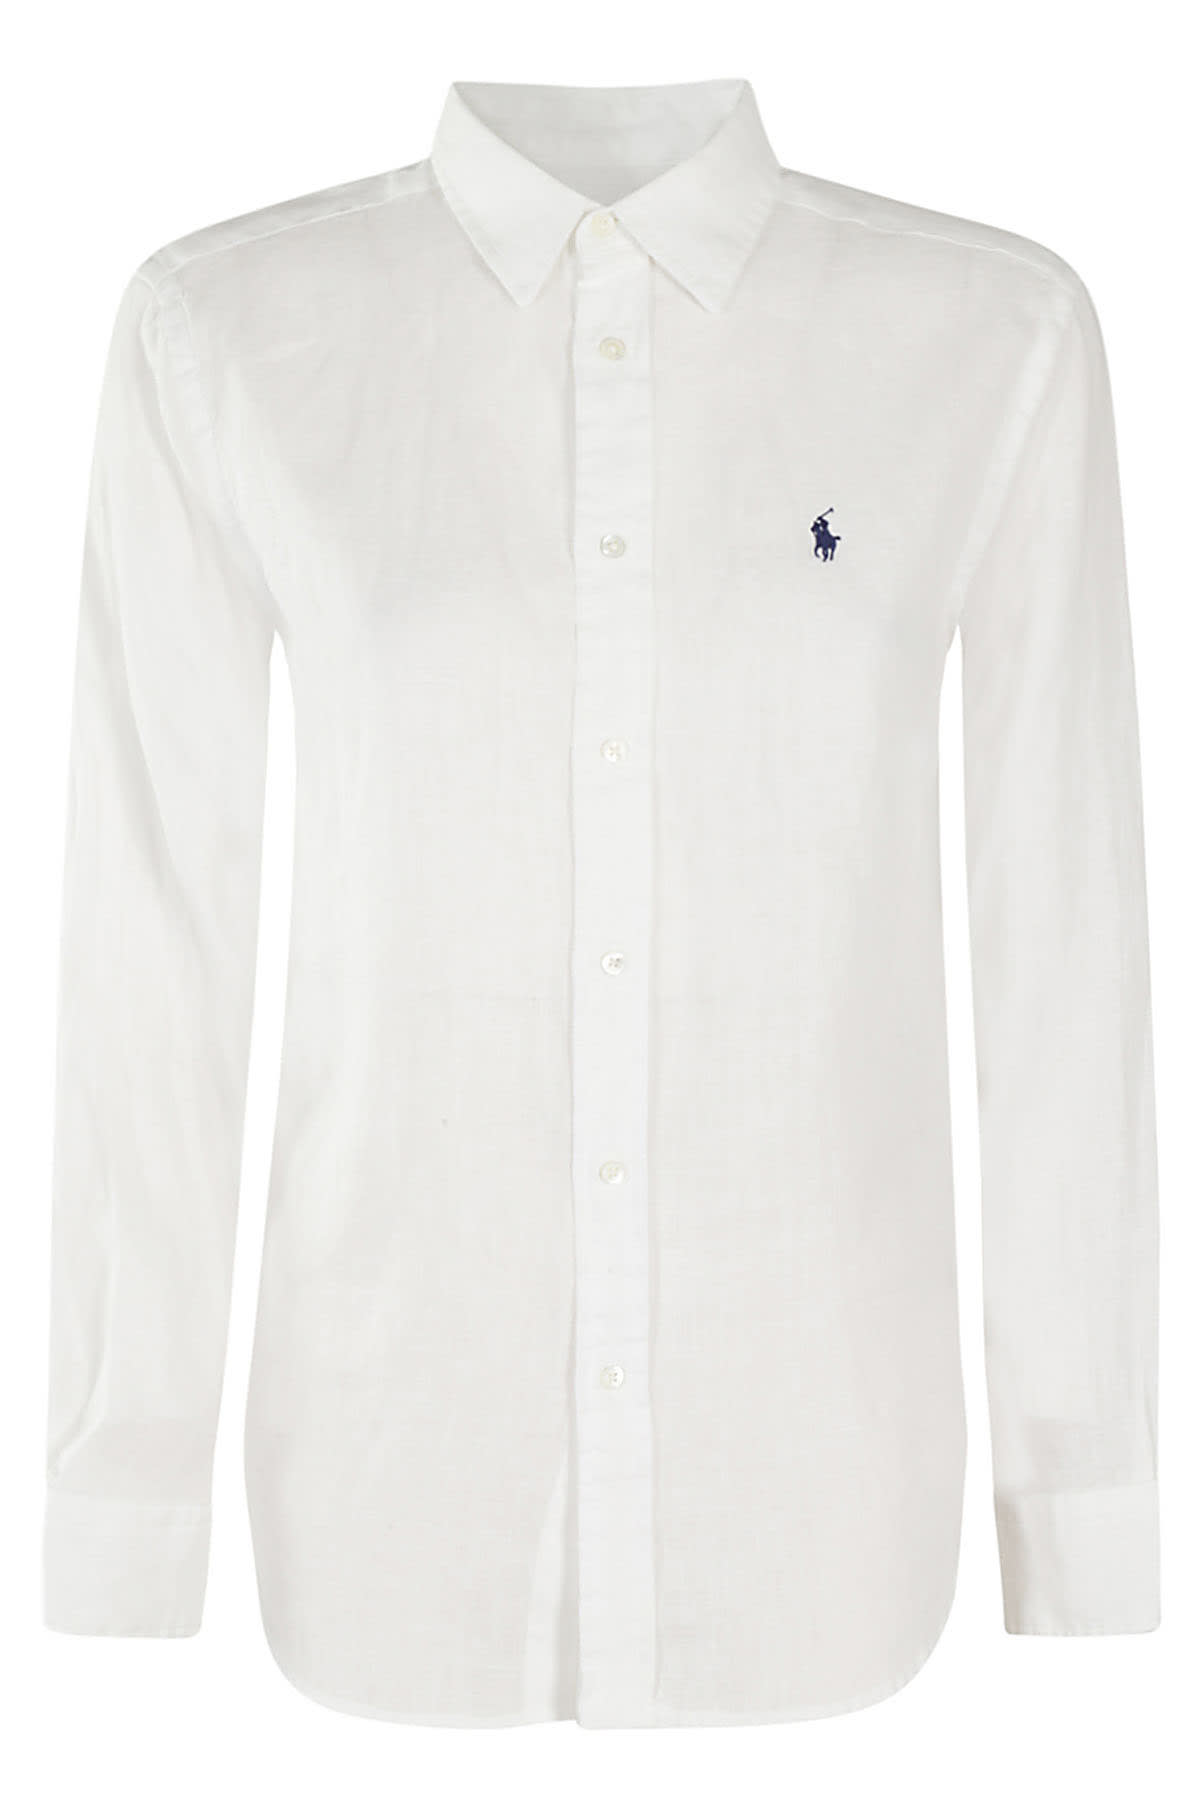 Polo Ralph Lauren Long Sleeve In White